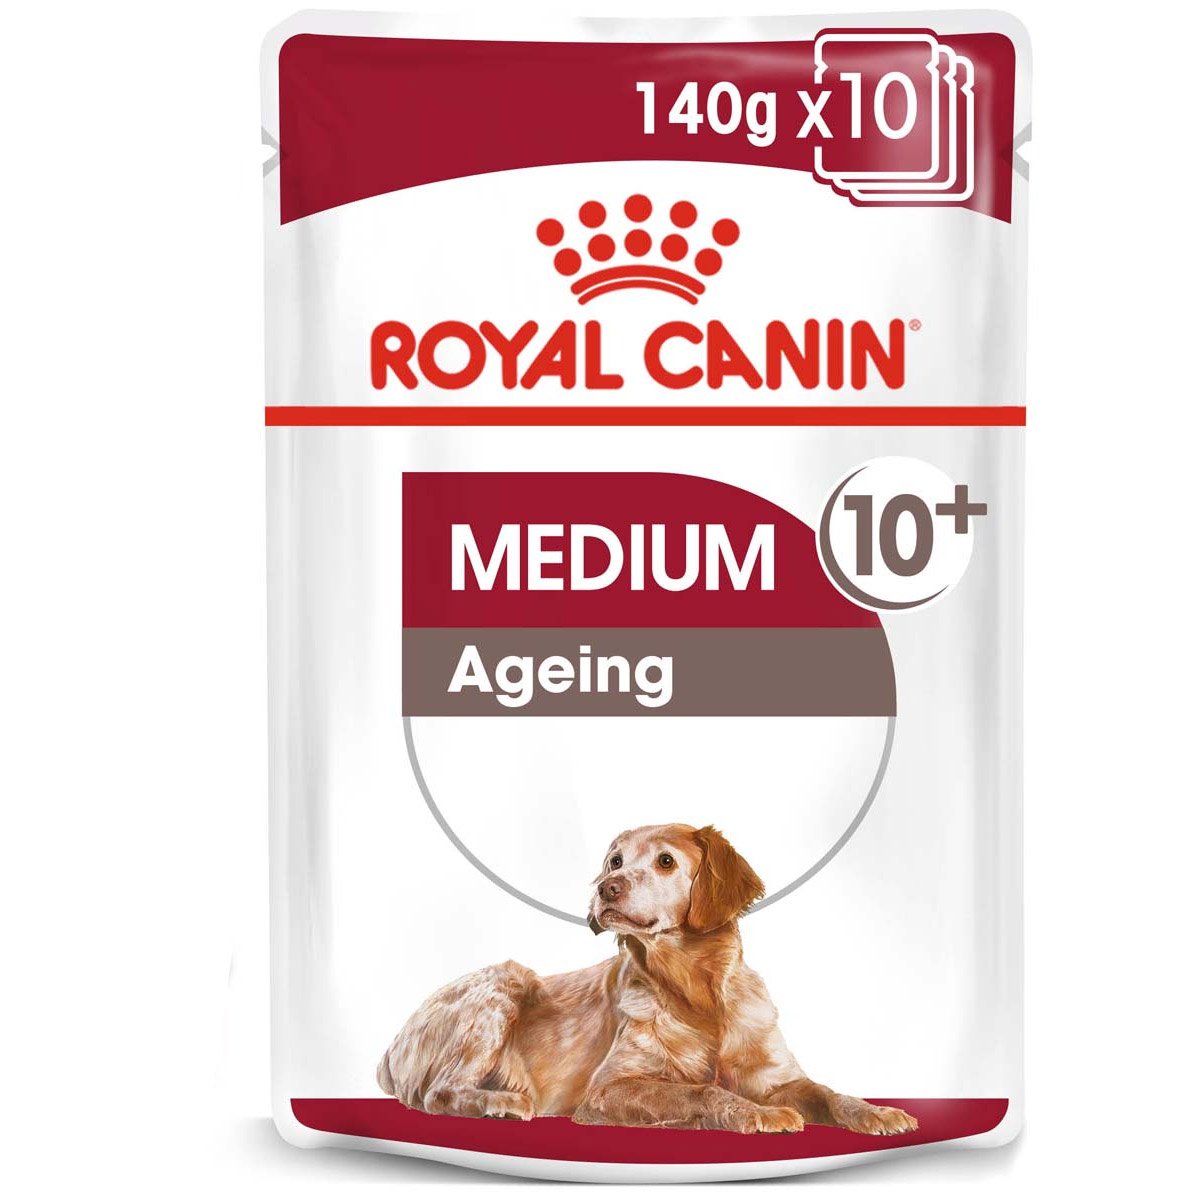 ROYAL CANIN MEDIUM AGEING 10+ Nassfutter für ältere mittelgroße Hunde 20x140g von Royal Canin